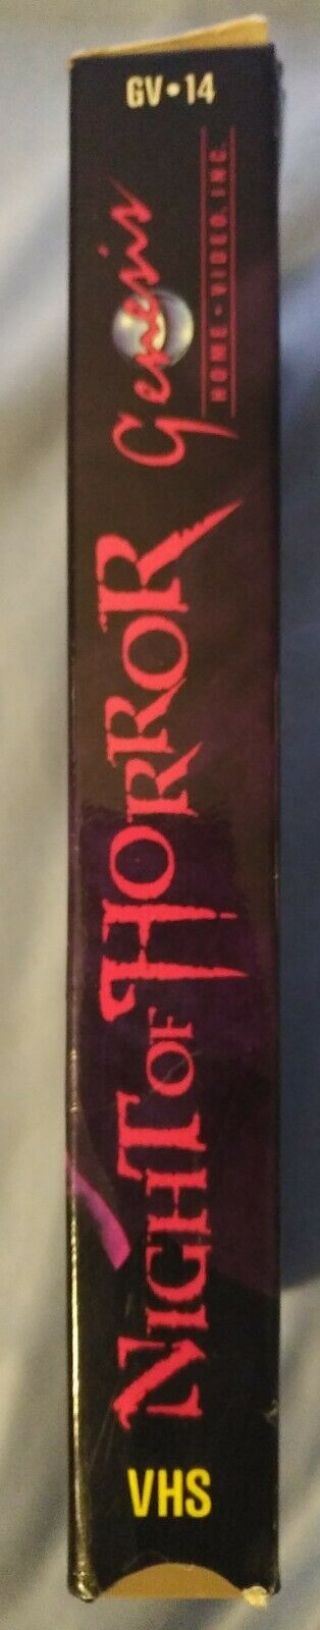 Night of Horror - VHS 1981,  RARE Genesis Home Video label,  horror 3